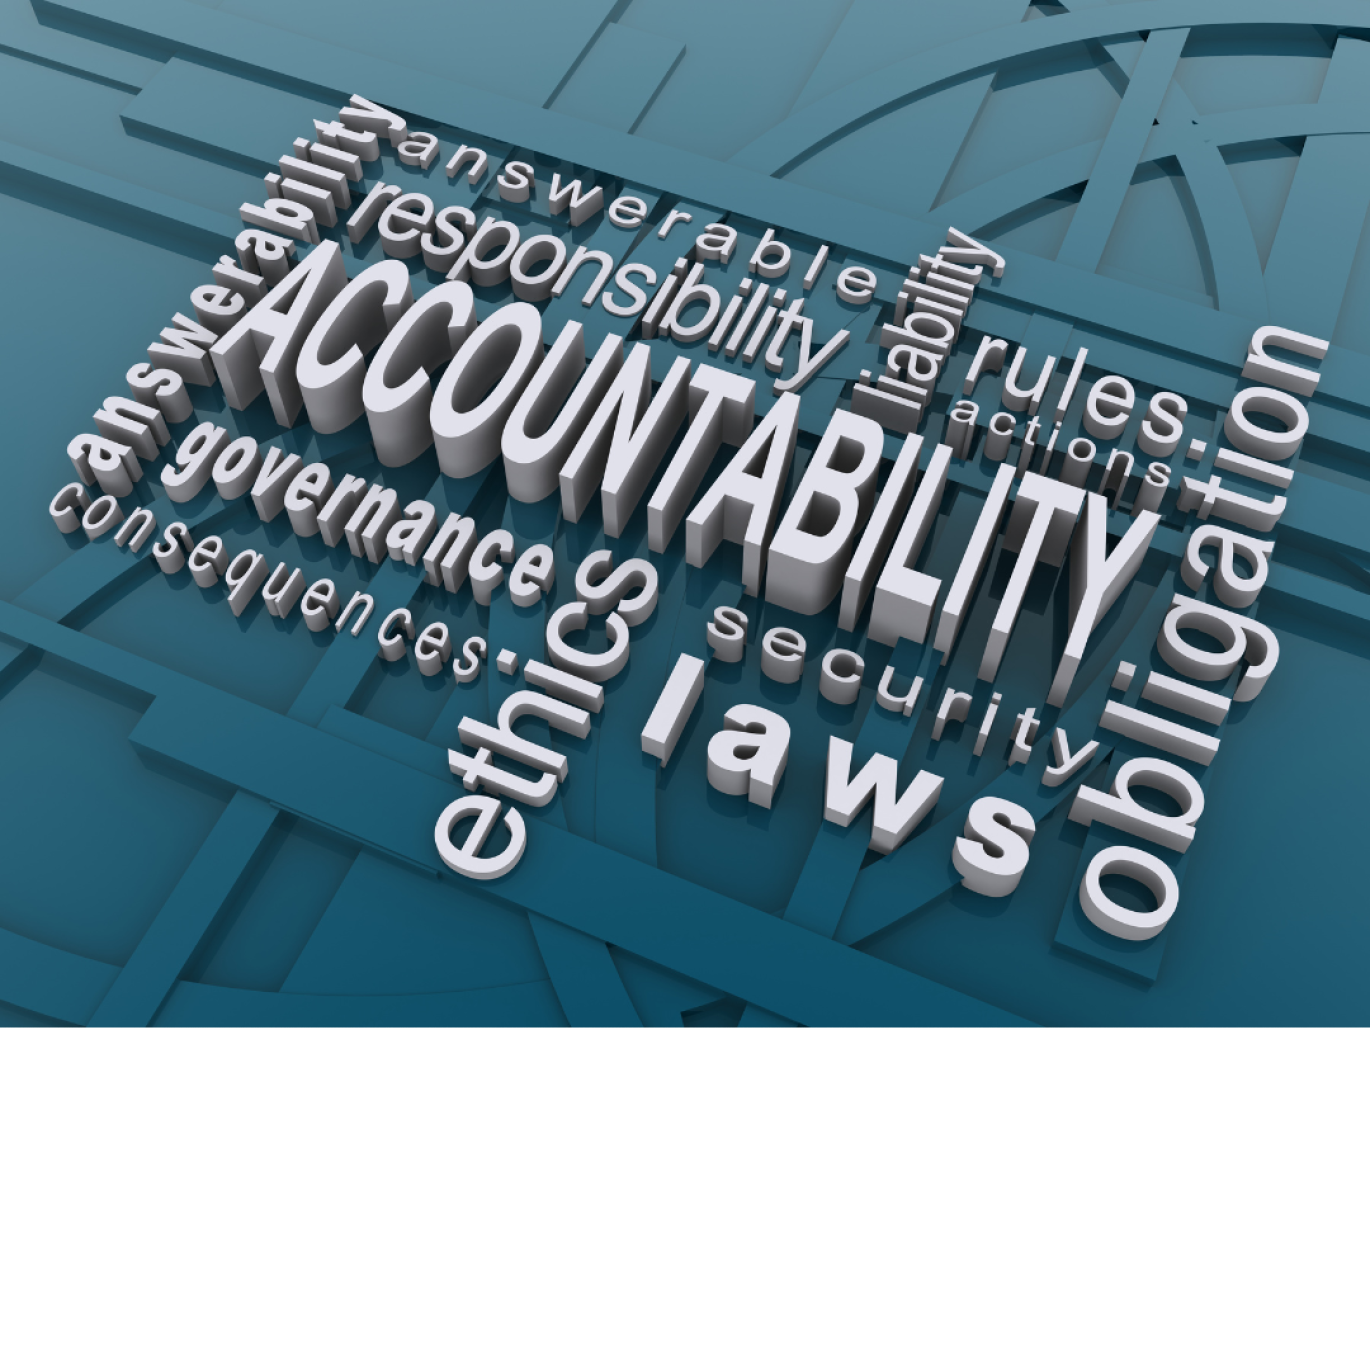 Image for Tautoko Workshop: Outcome-based Accountability